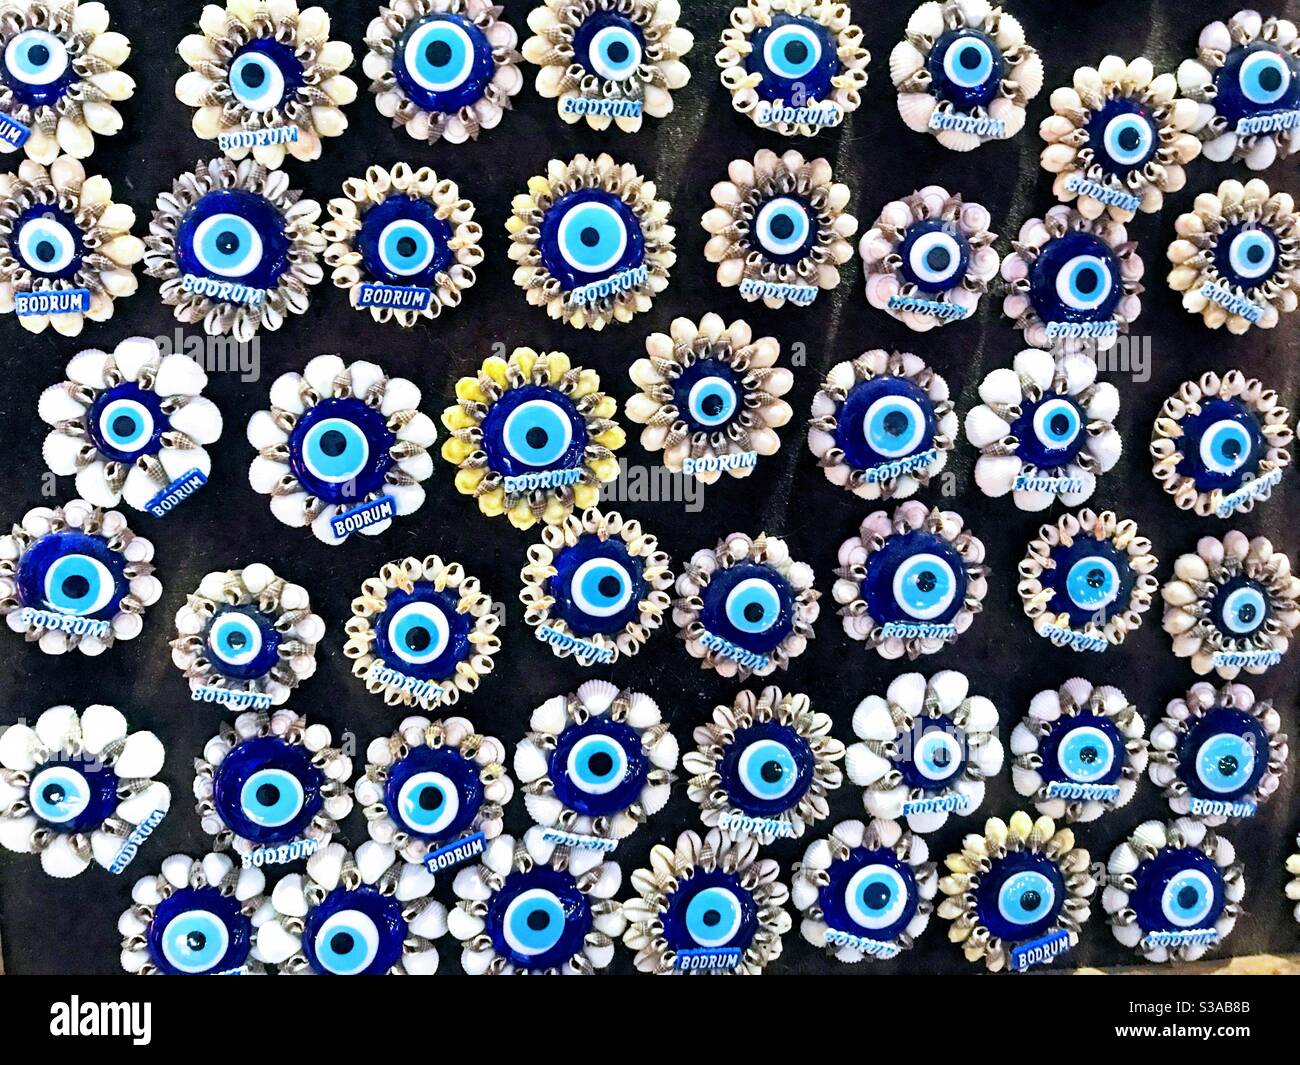 Nazar boncuk blue eye Stock Photo - Alamy